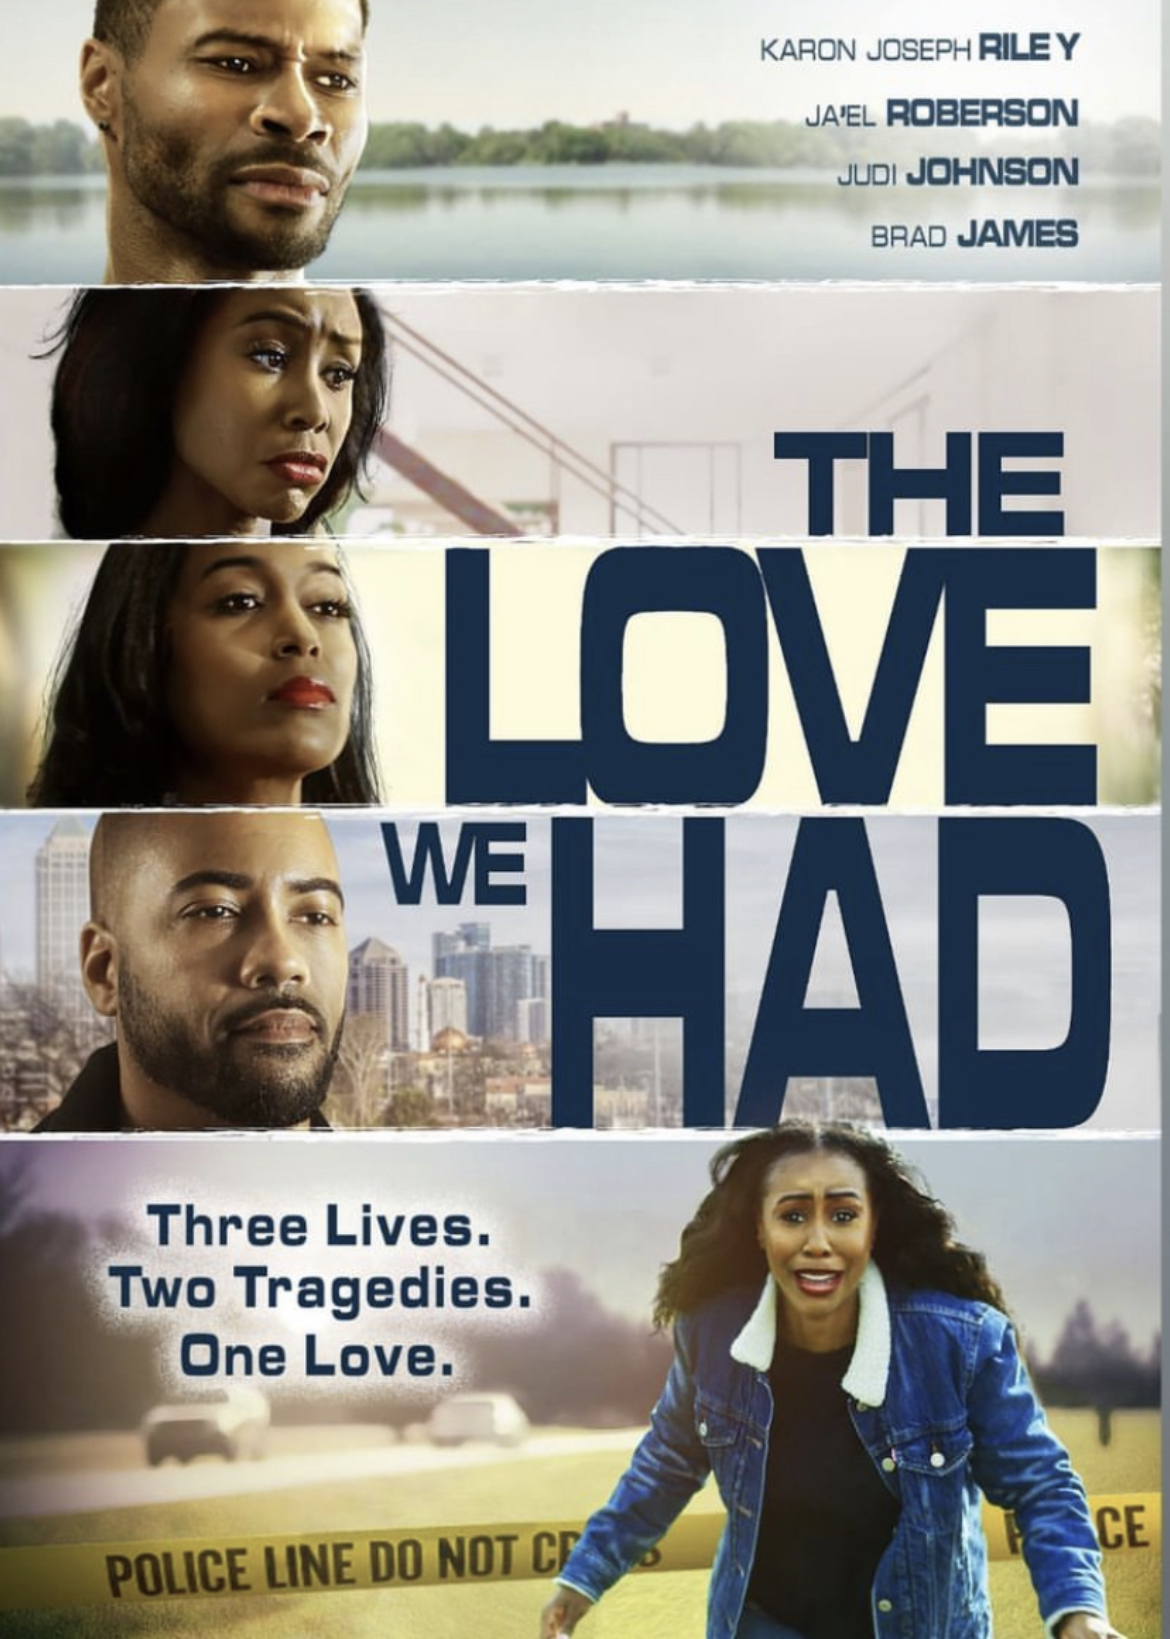 The Love We Had | Full, Free Movie | Three Lives, Two Tragedies | Brad James | Romance, Drama